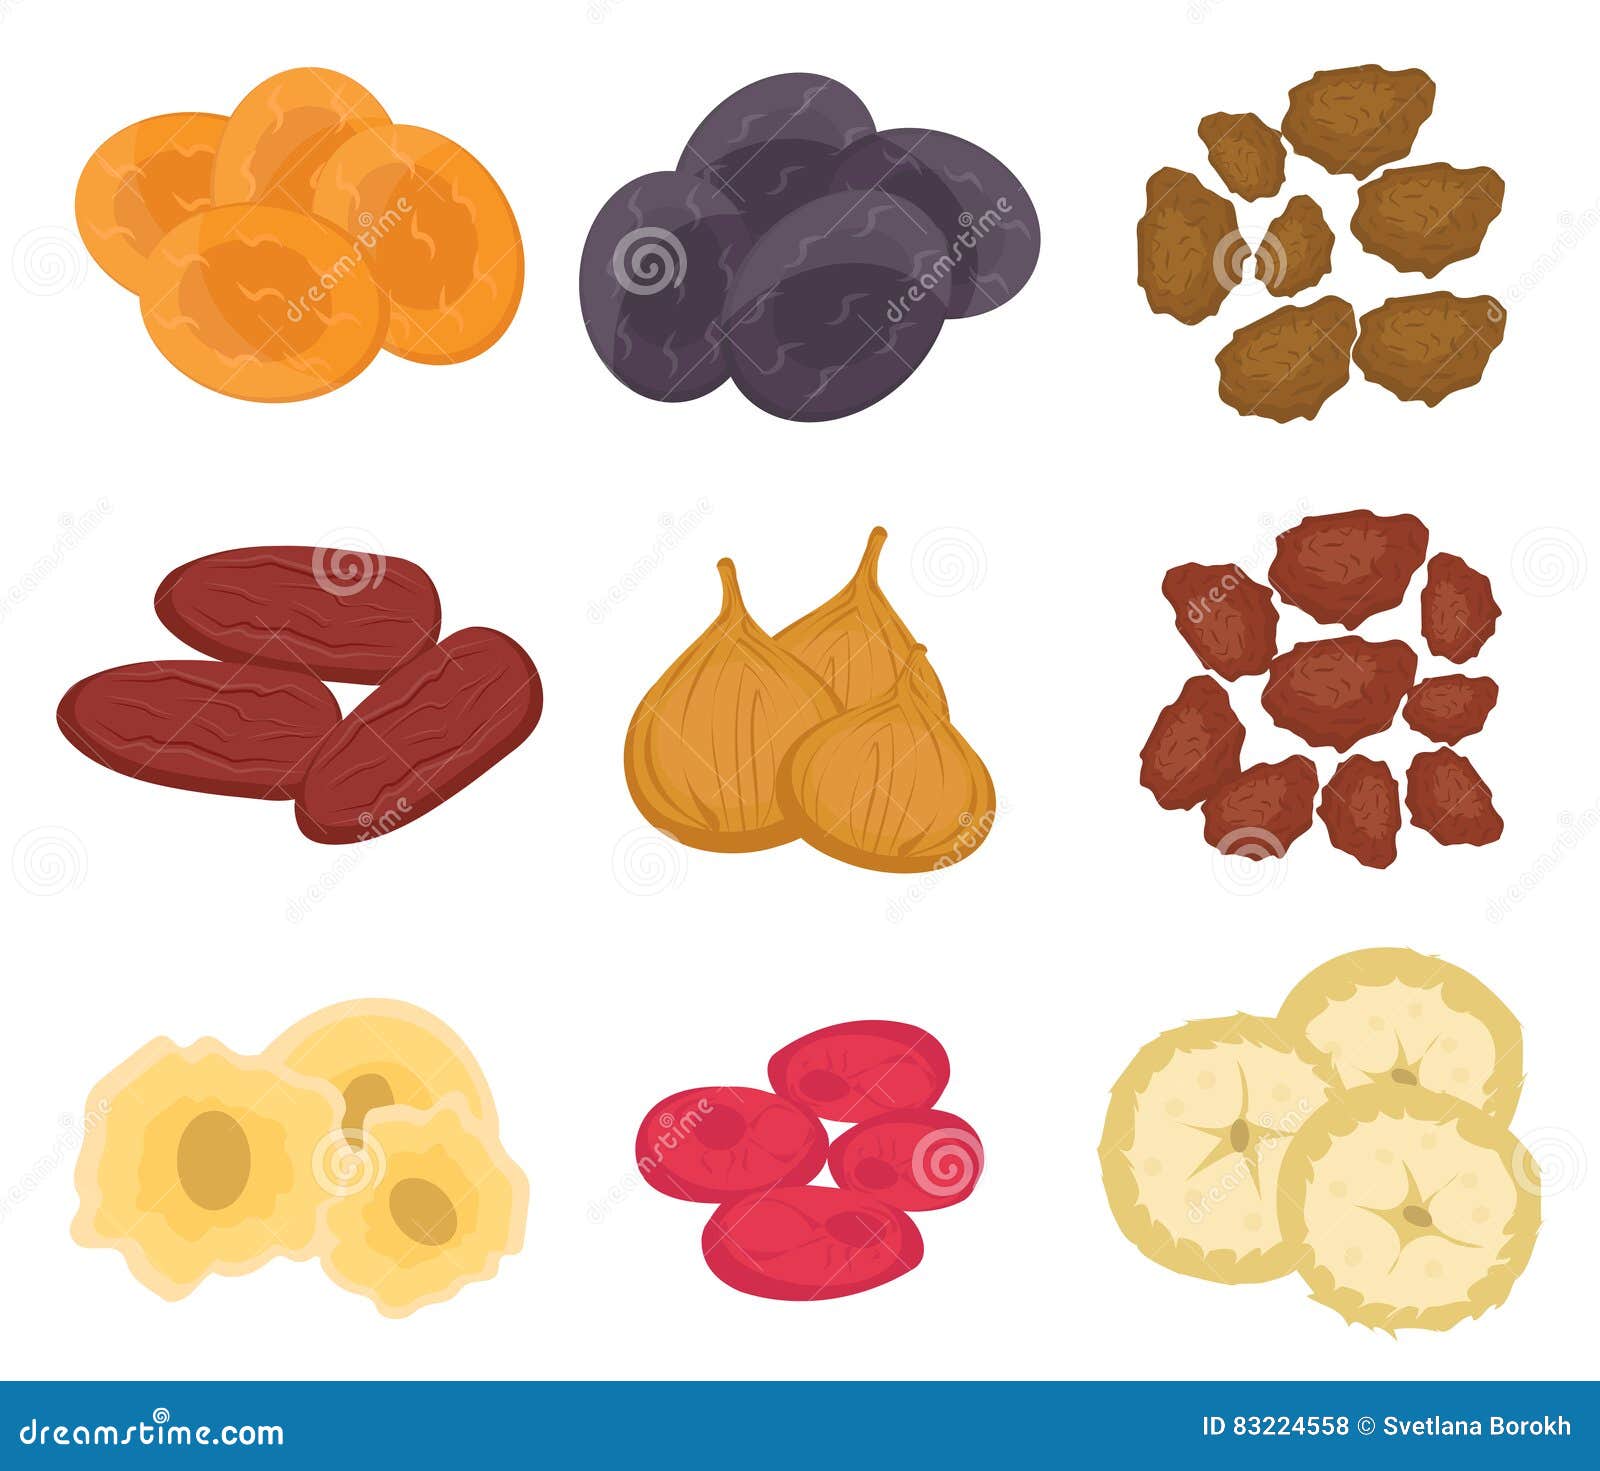 dried fruits set, flat style. raisins, apricots, prunes on a white background.  , clip art